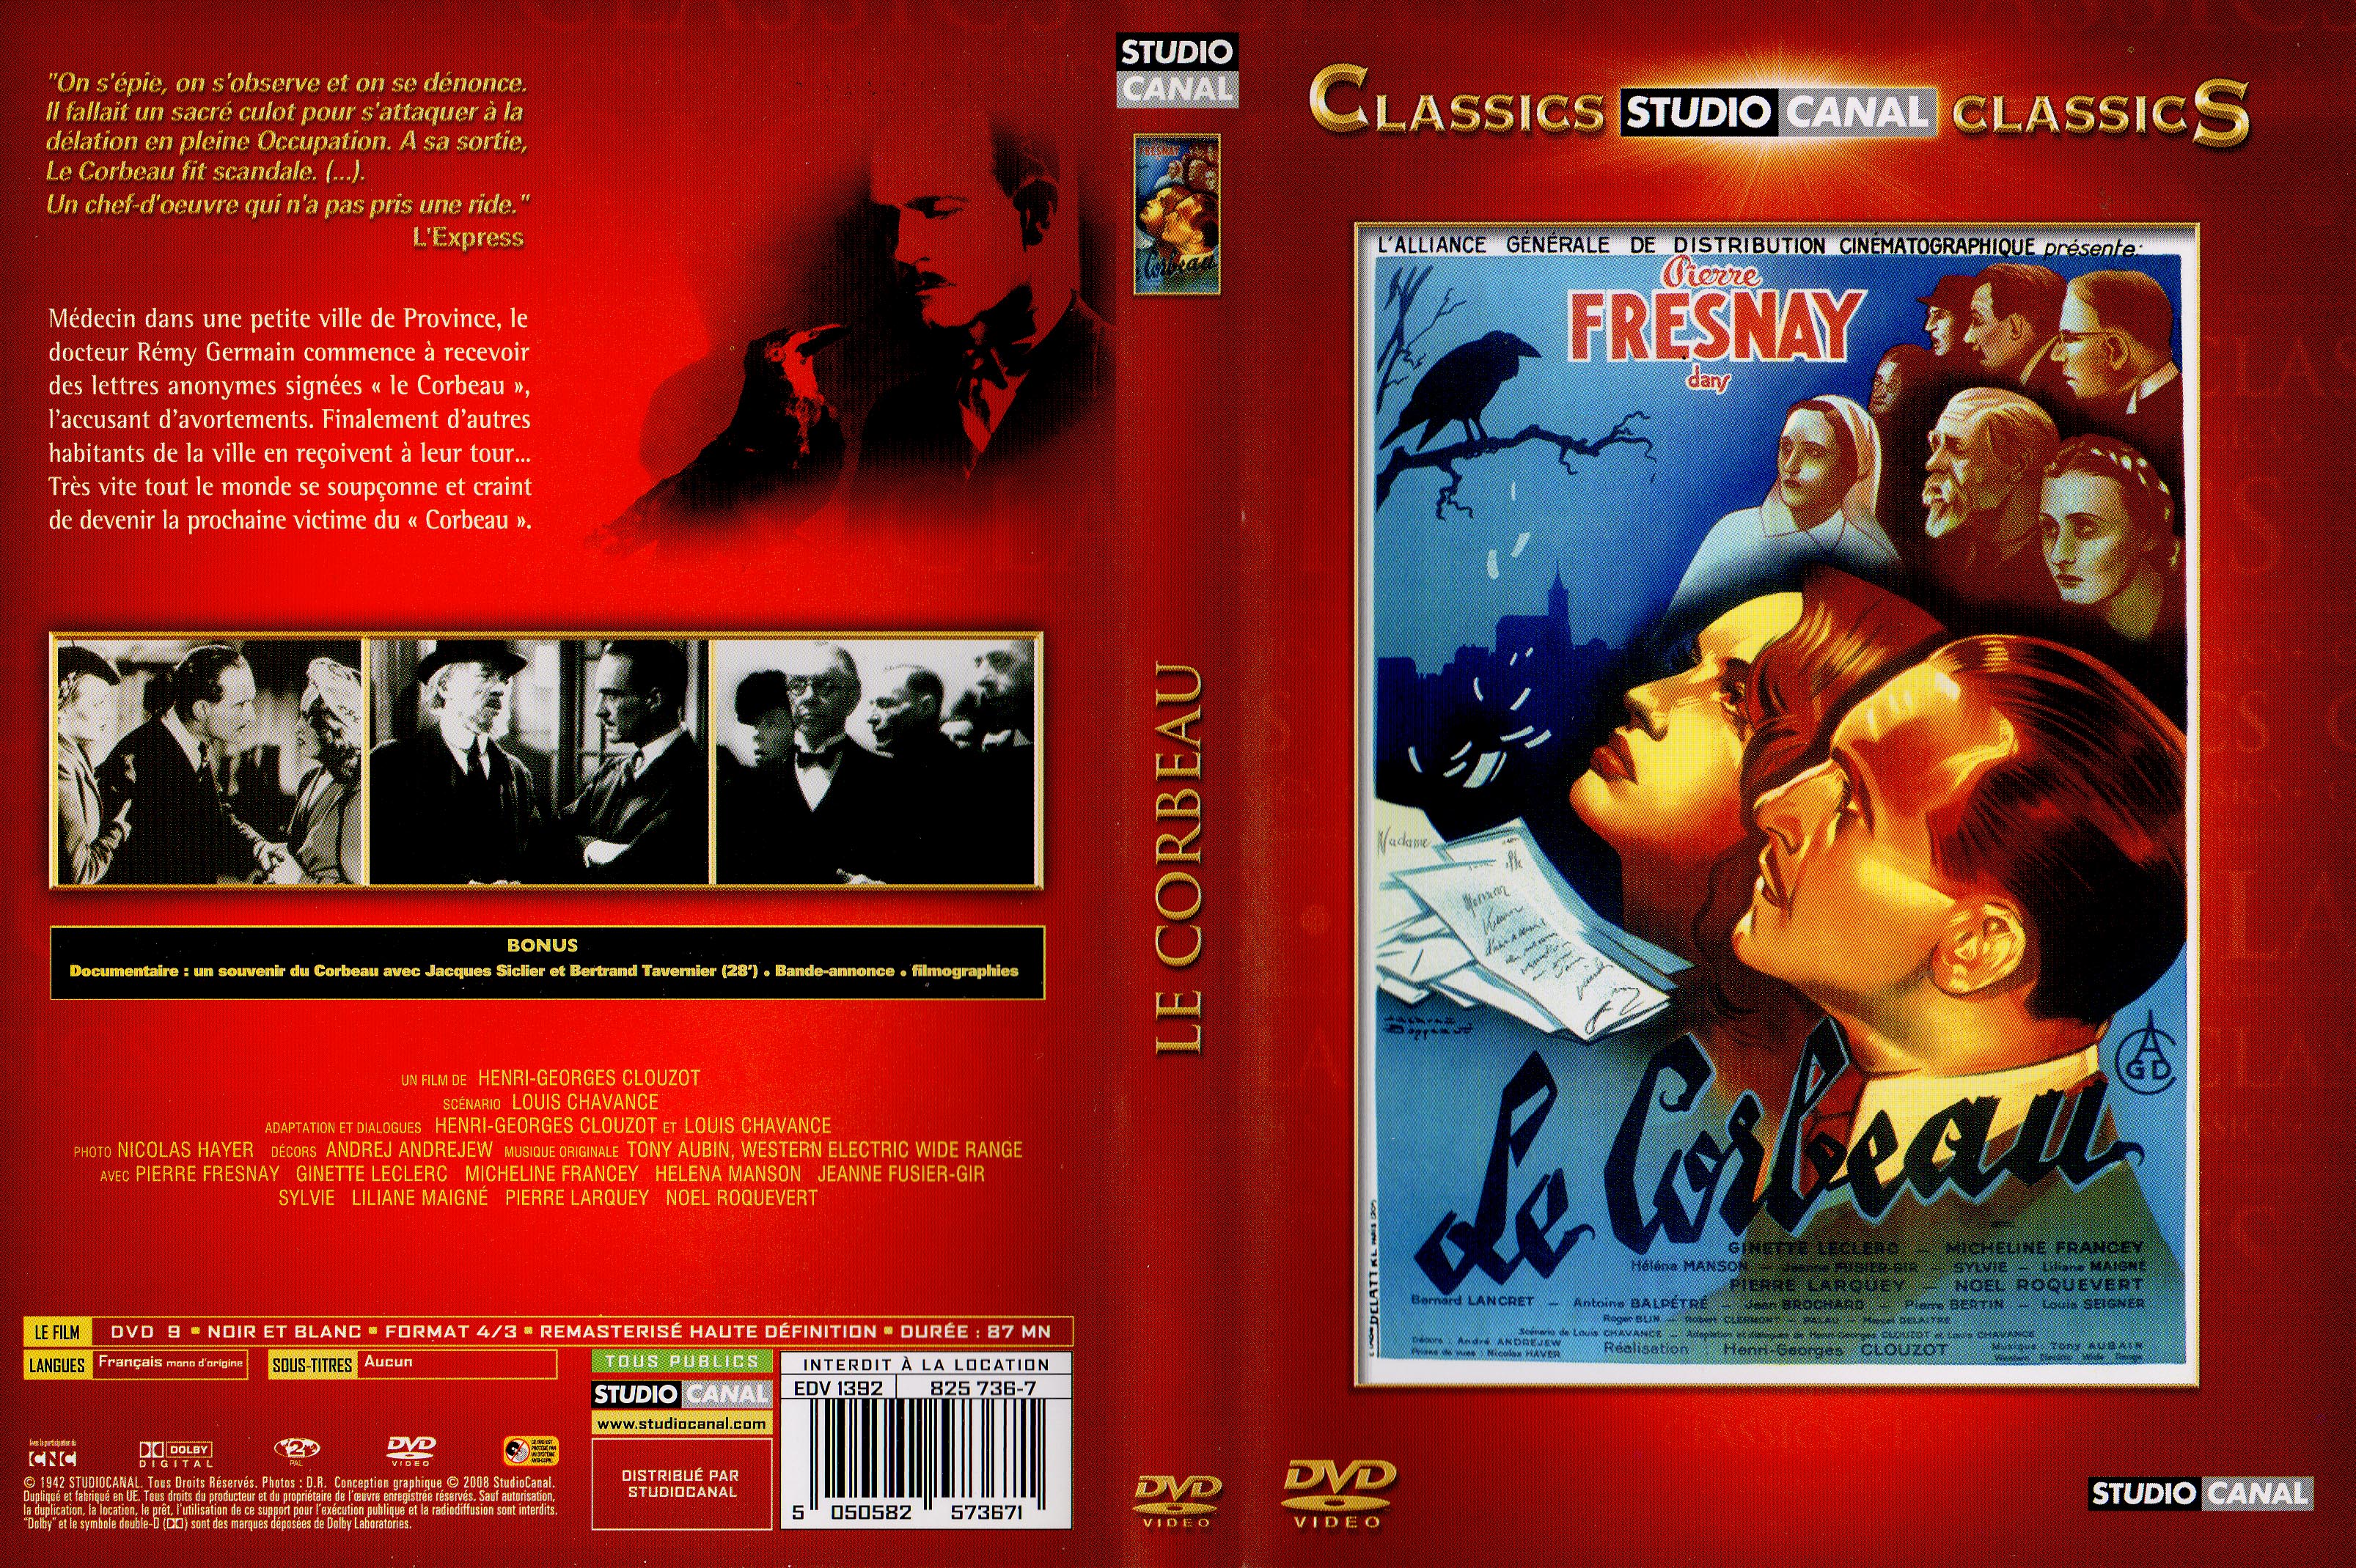 Jaquette DVD Le corbeau (1943) v2